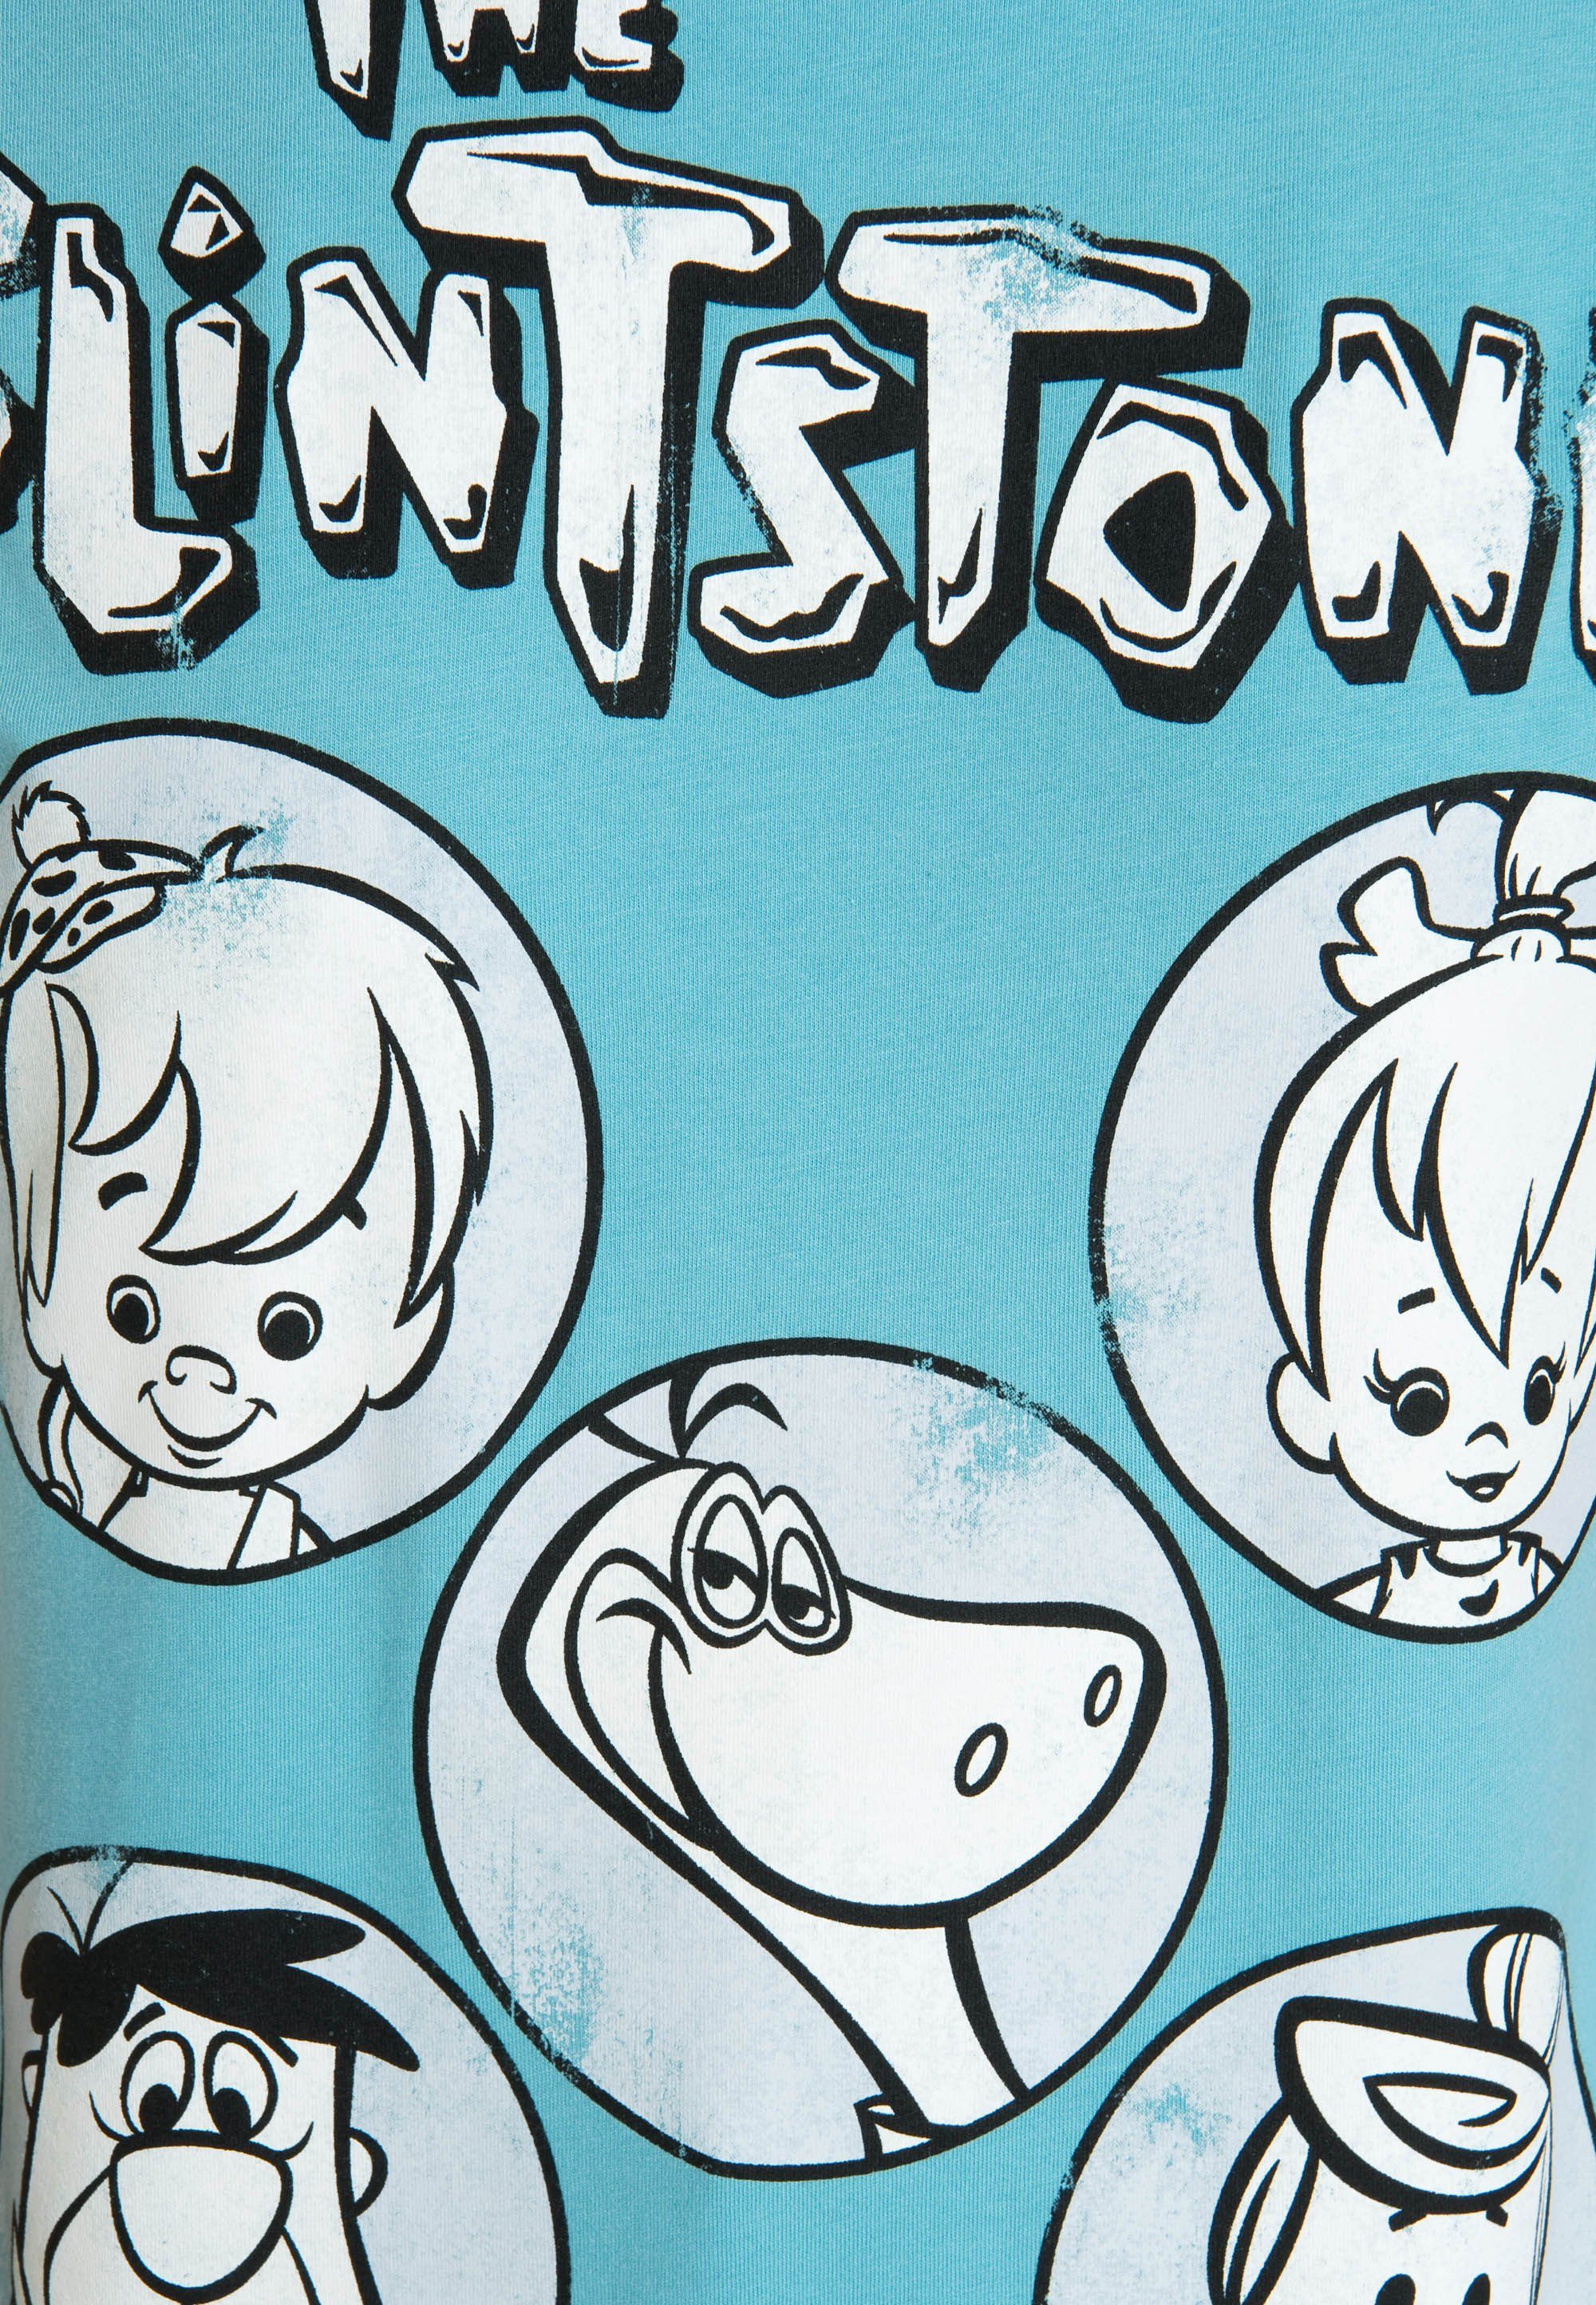 T-Shirt lizenziertem The mit LOGOSHIRT Flintstones Originaldesign